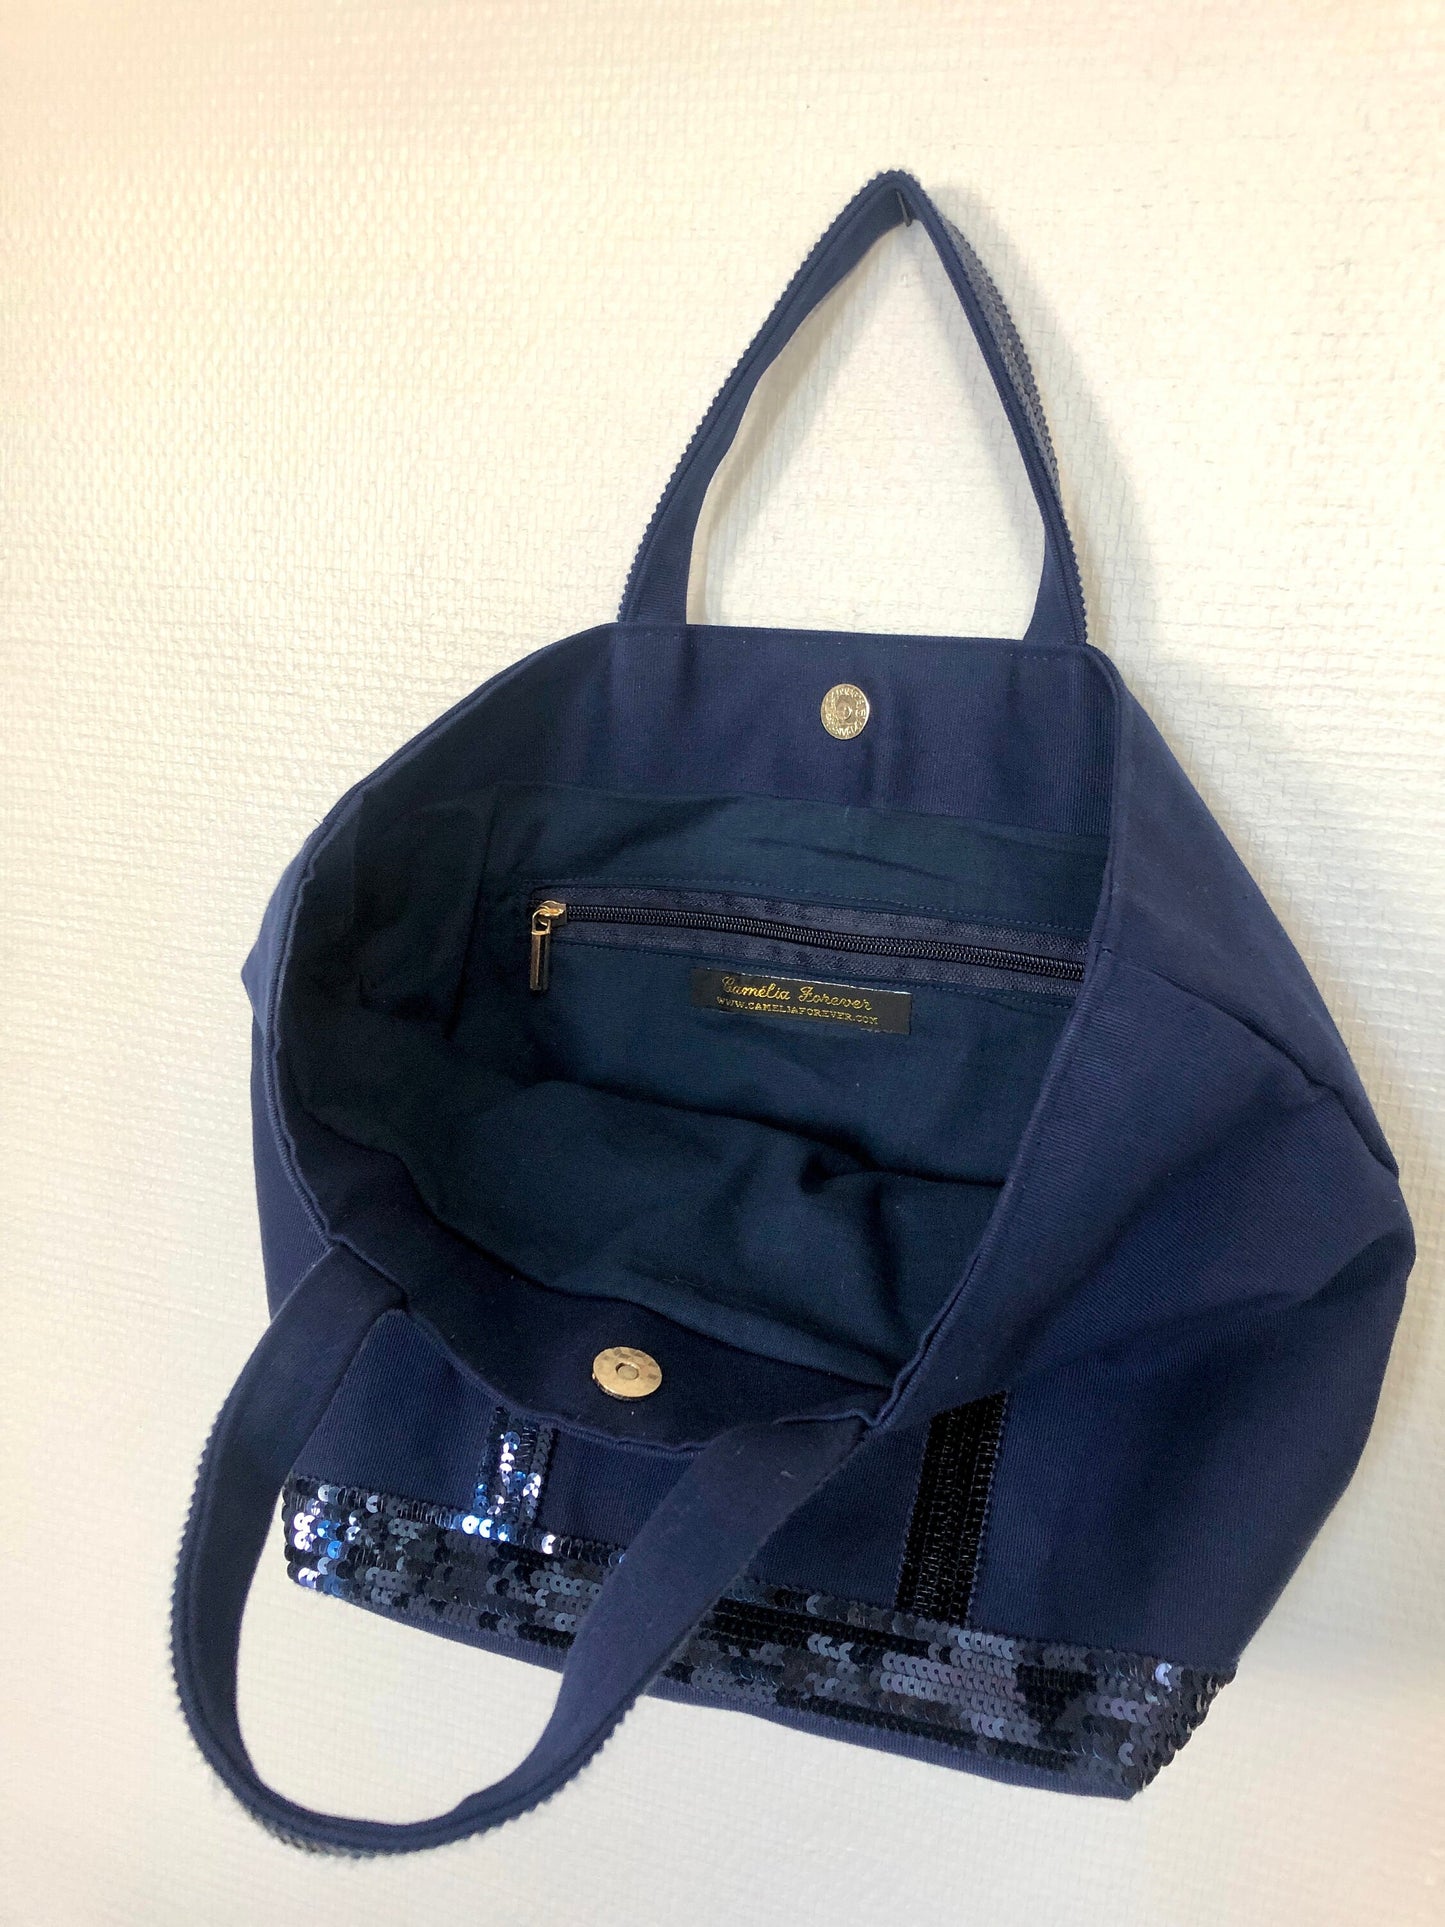 Navy coton sequin tote bag, handheld navy shopper, French chic sequin purse, Emilie in Paris style, Paris chic purse,